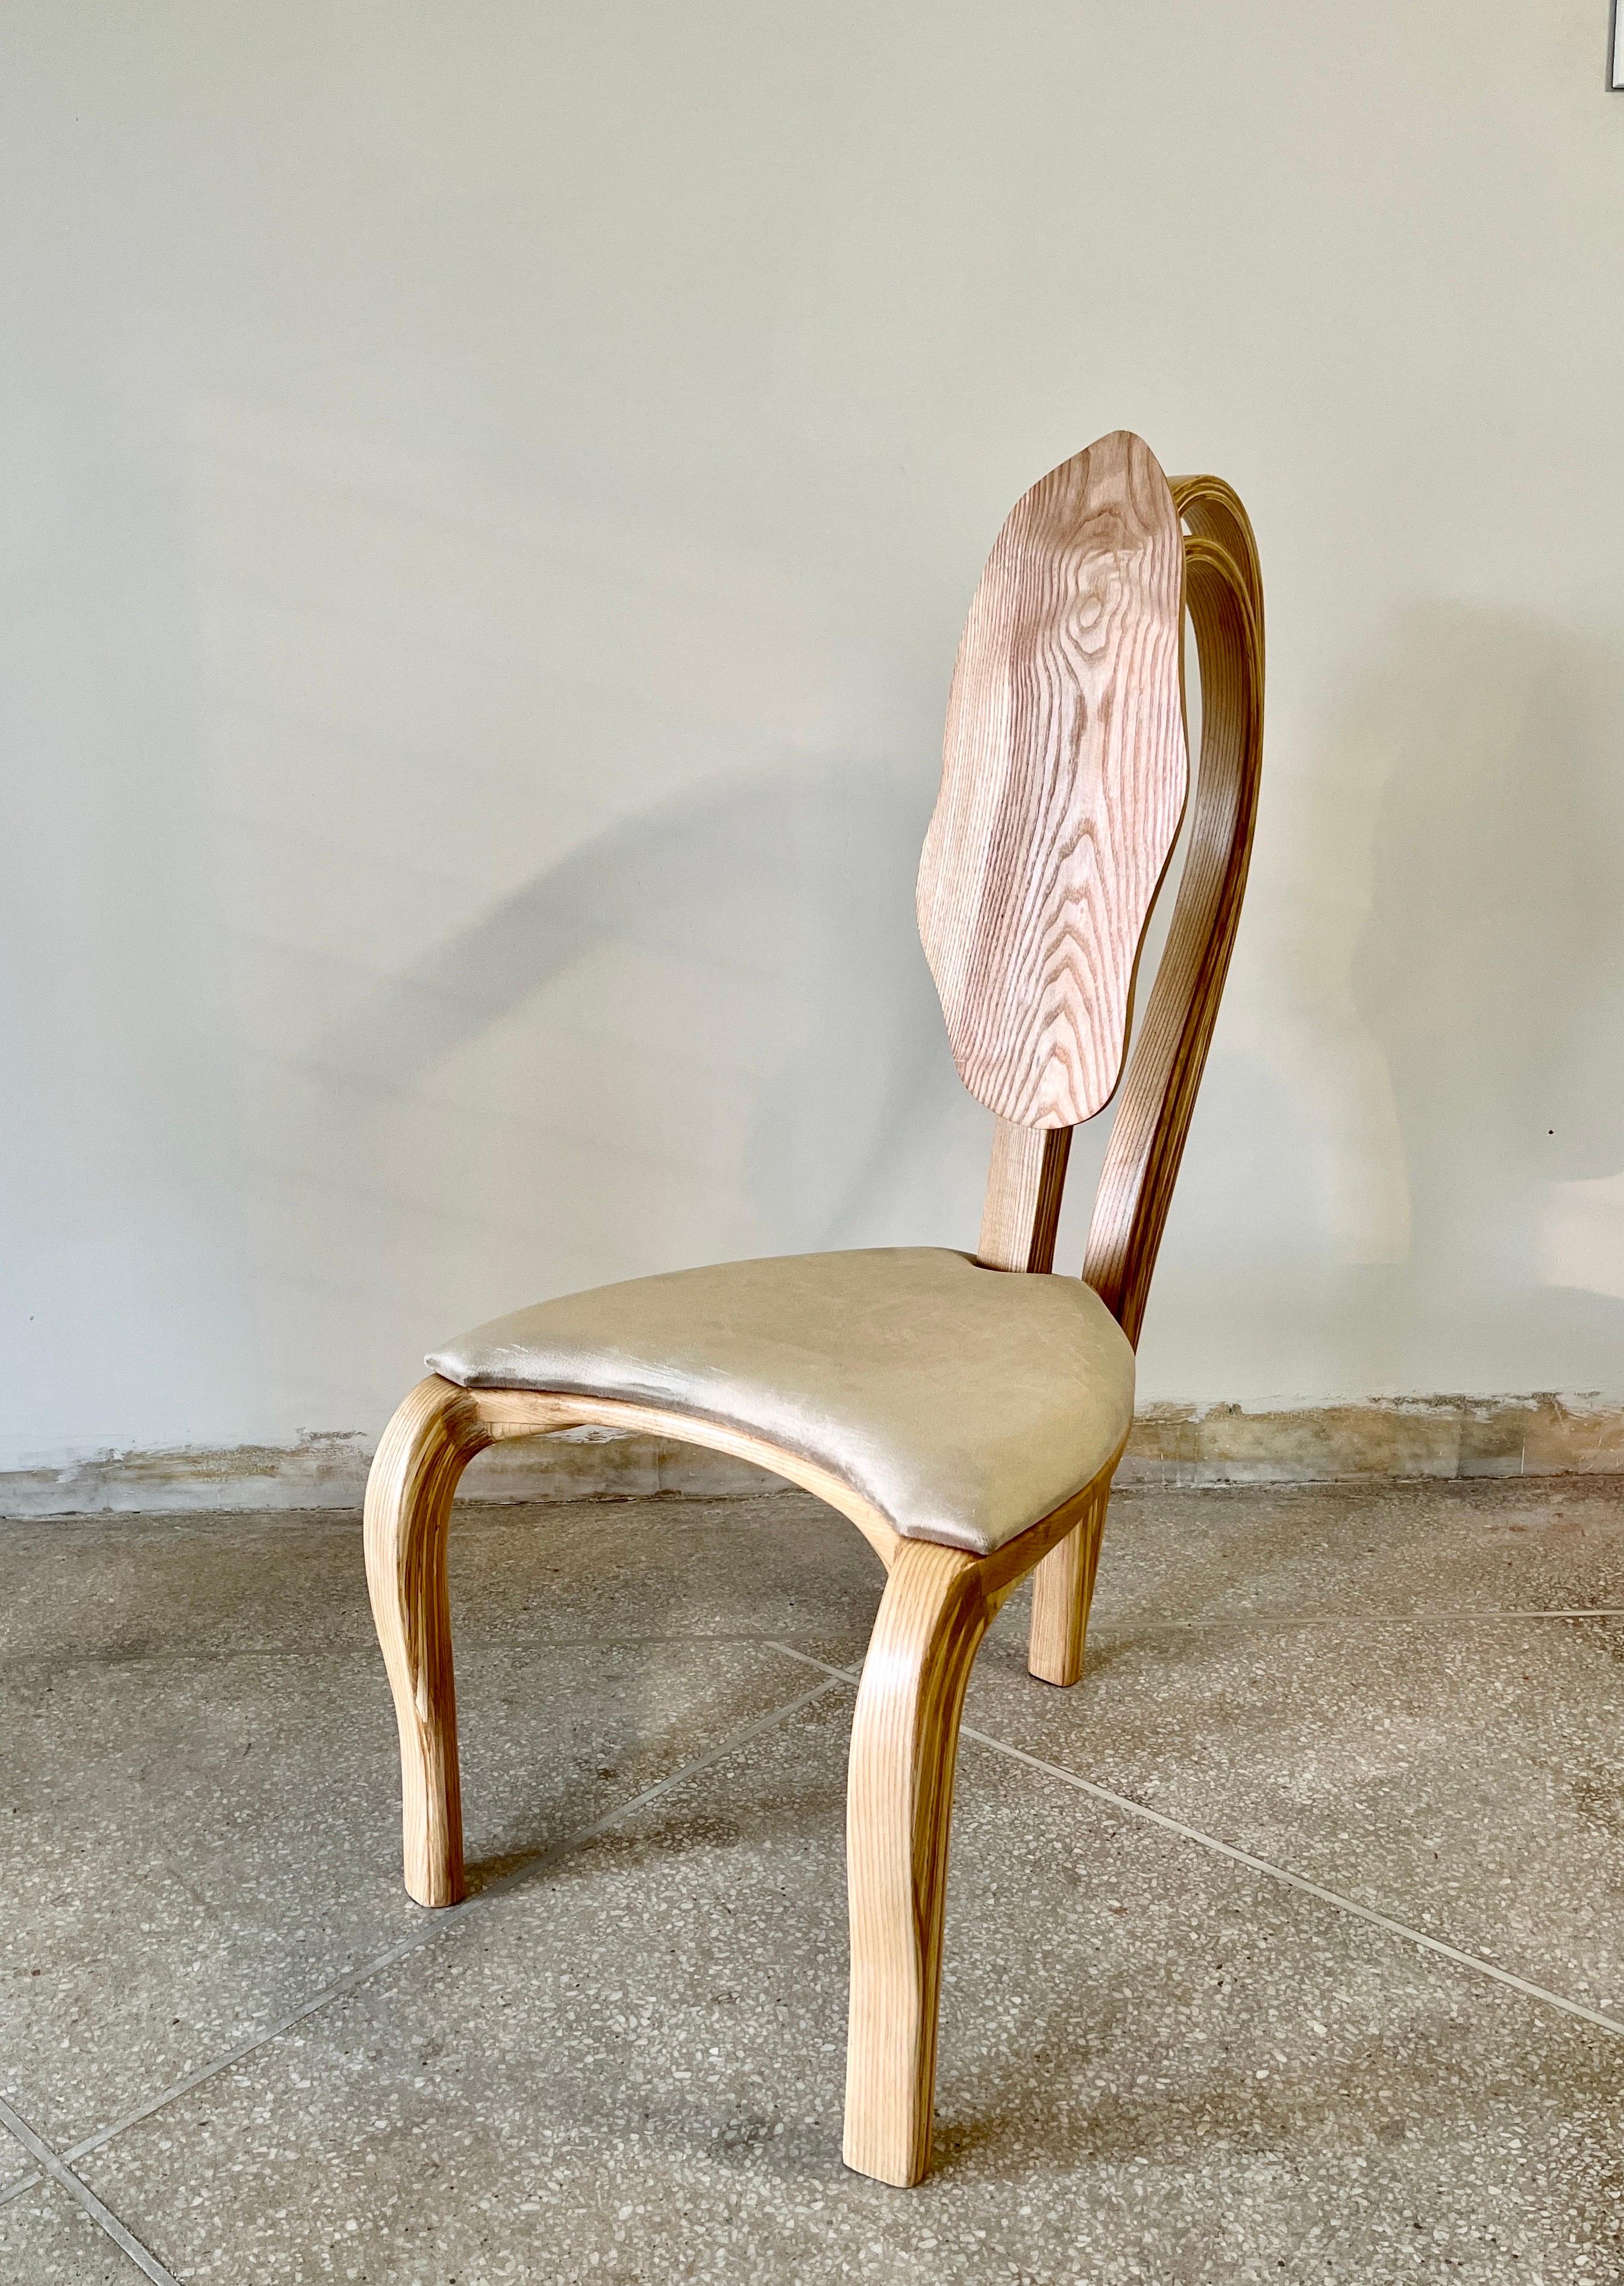 Contemporary Dining Chair No. 1 - Fluentum Series, by Raka Studio For Sale